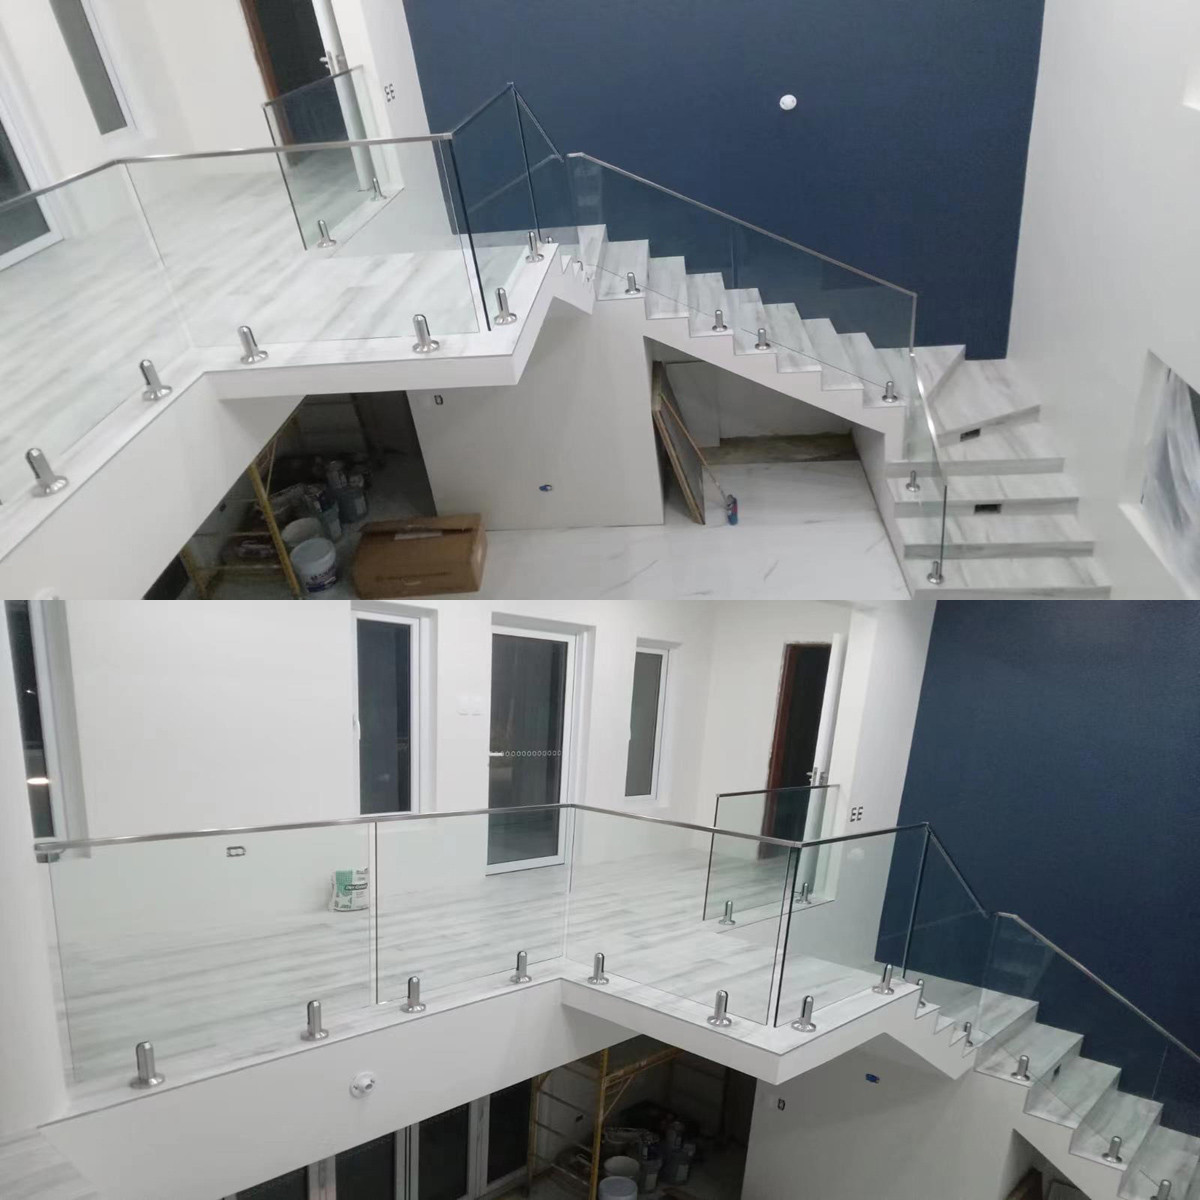 glass balustrade stairs